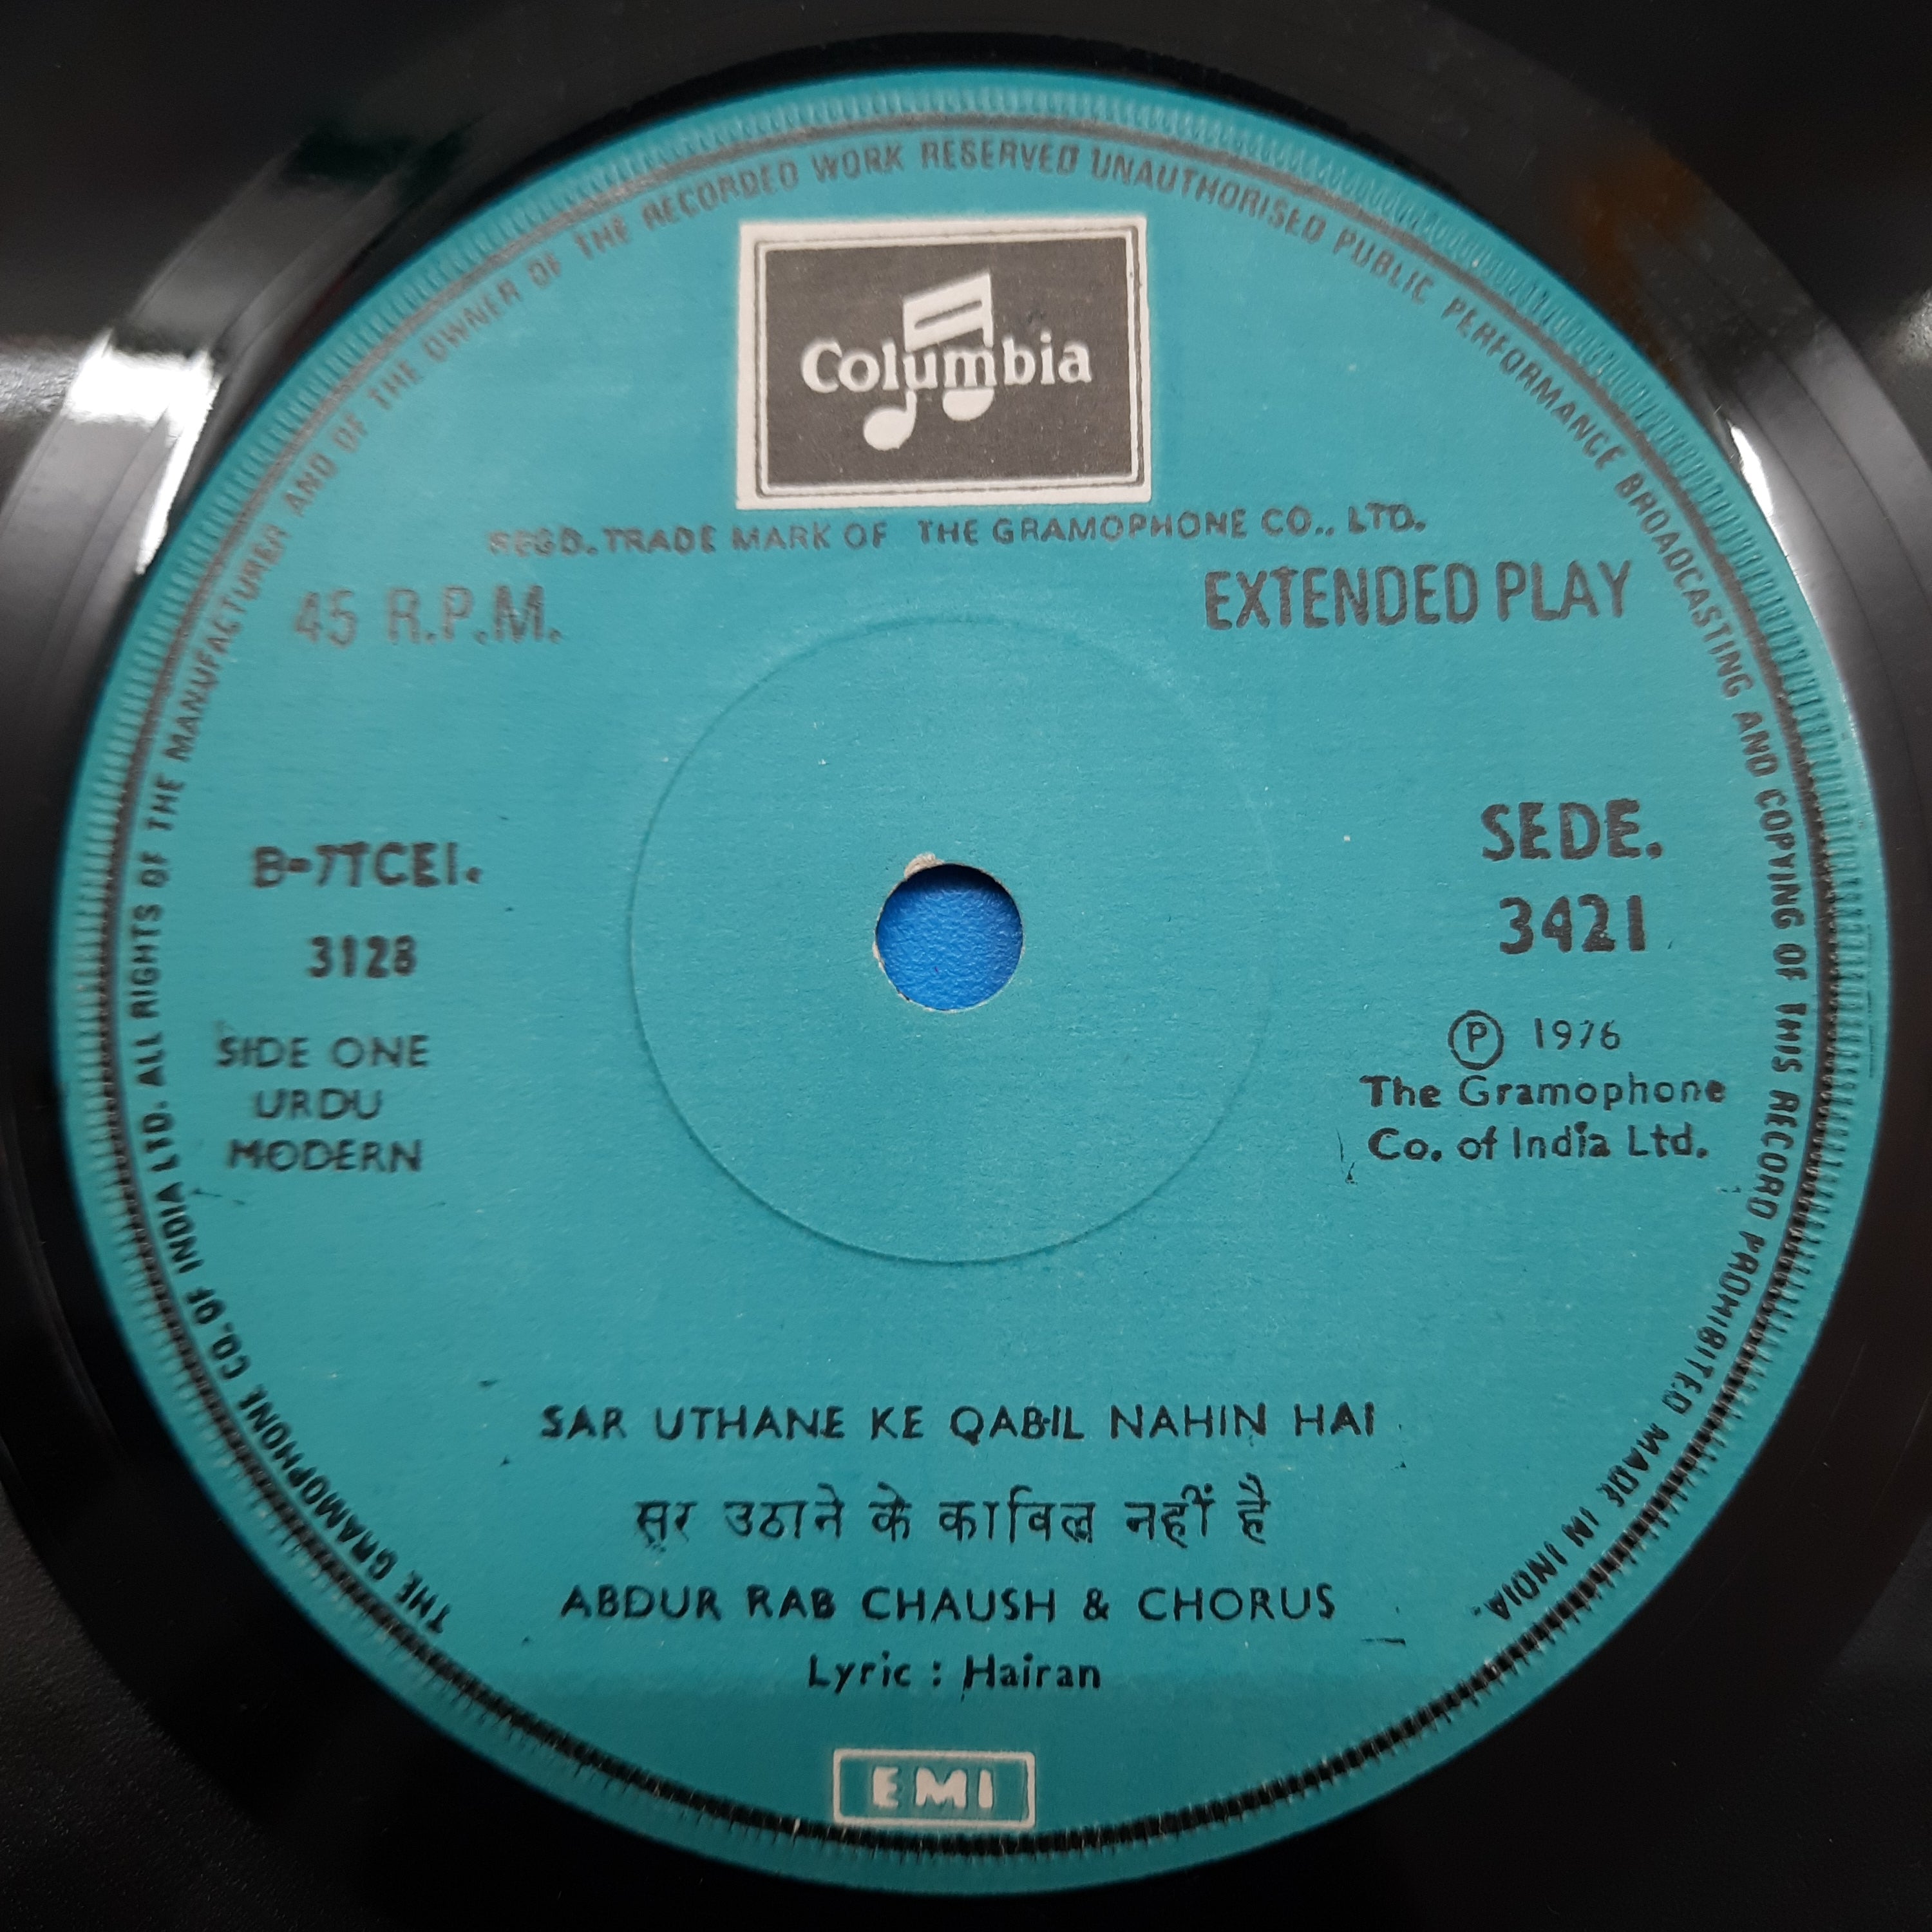 Abdur Rab Chaush/ Rashid Hairan - Ashiqana Aur Rindana Qawwali (45-RPM)